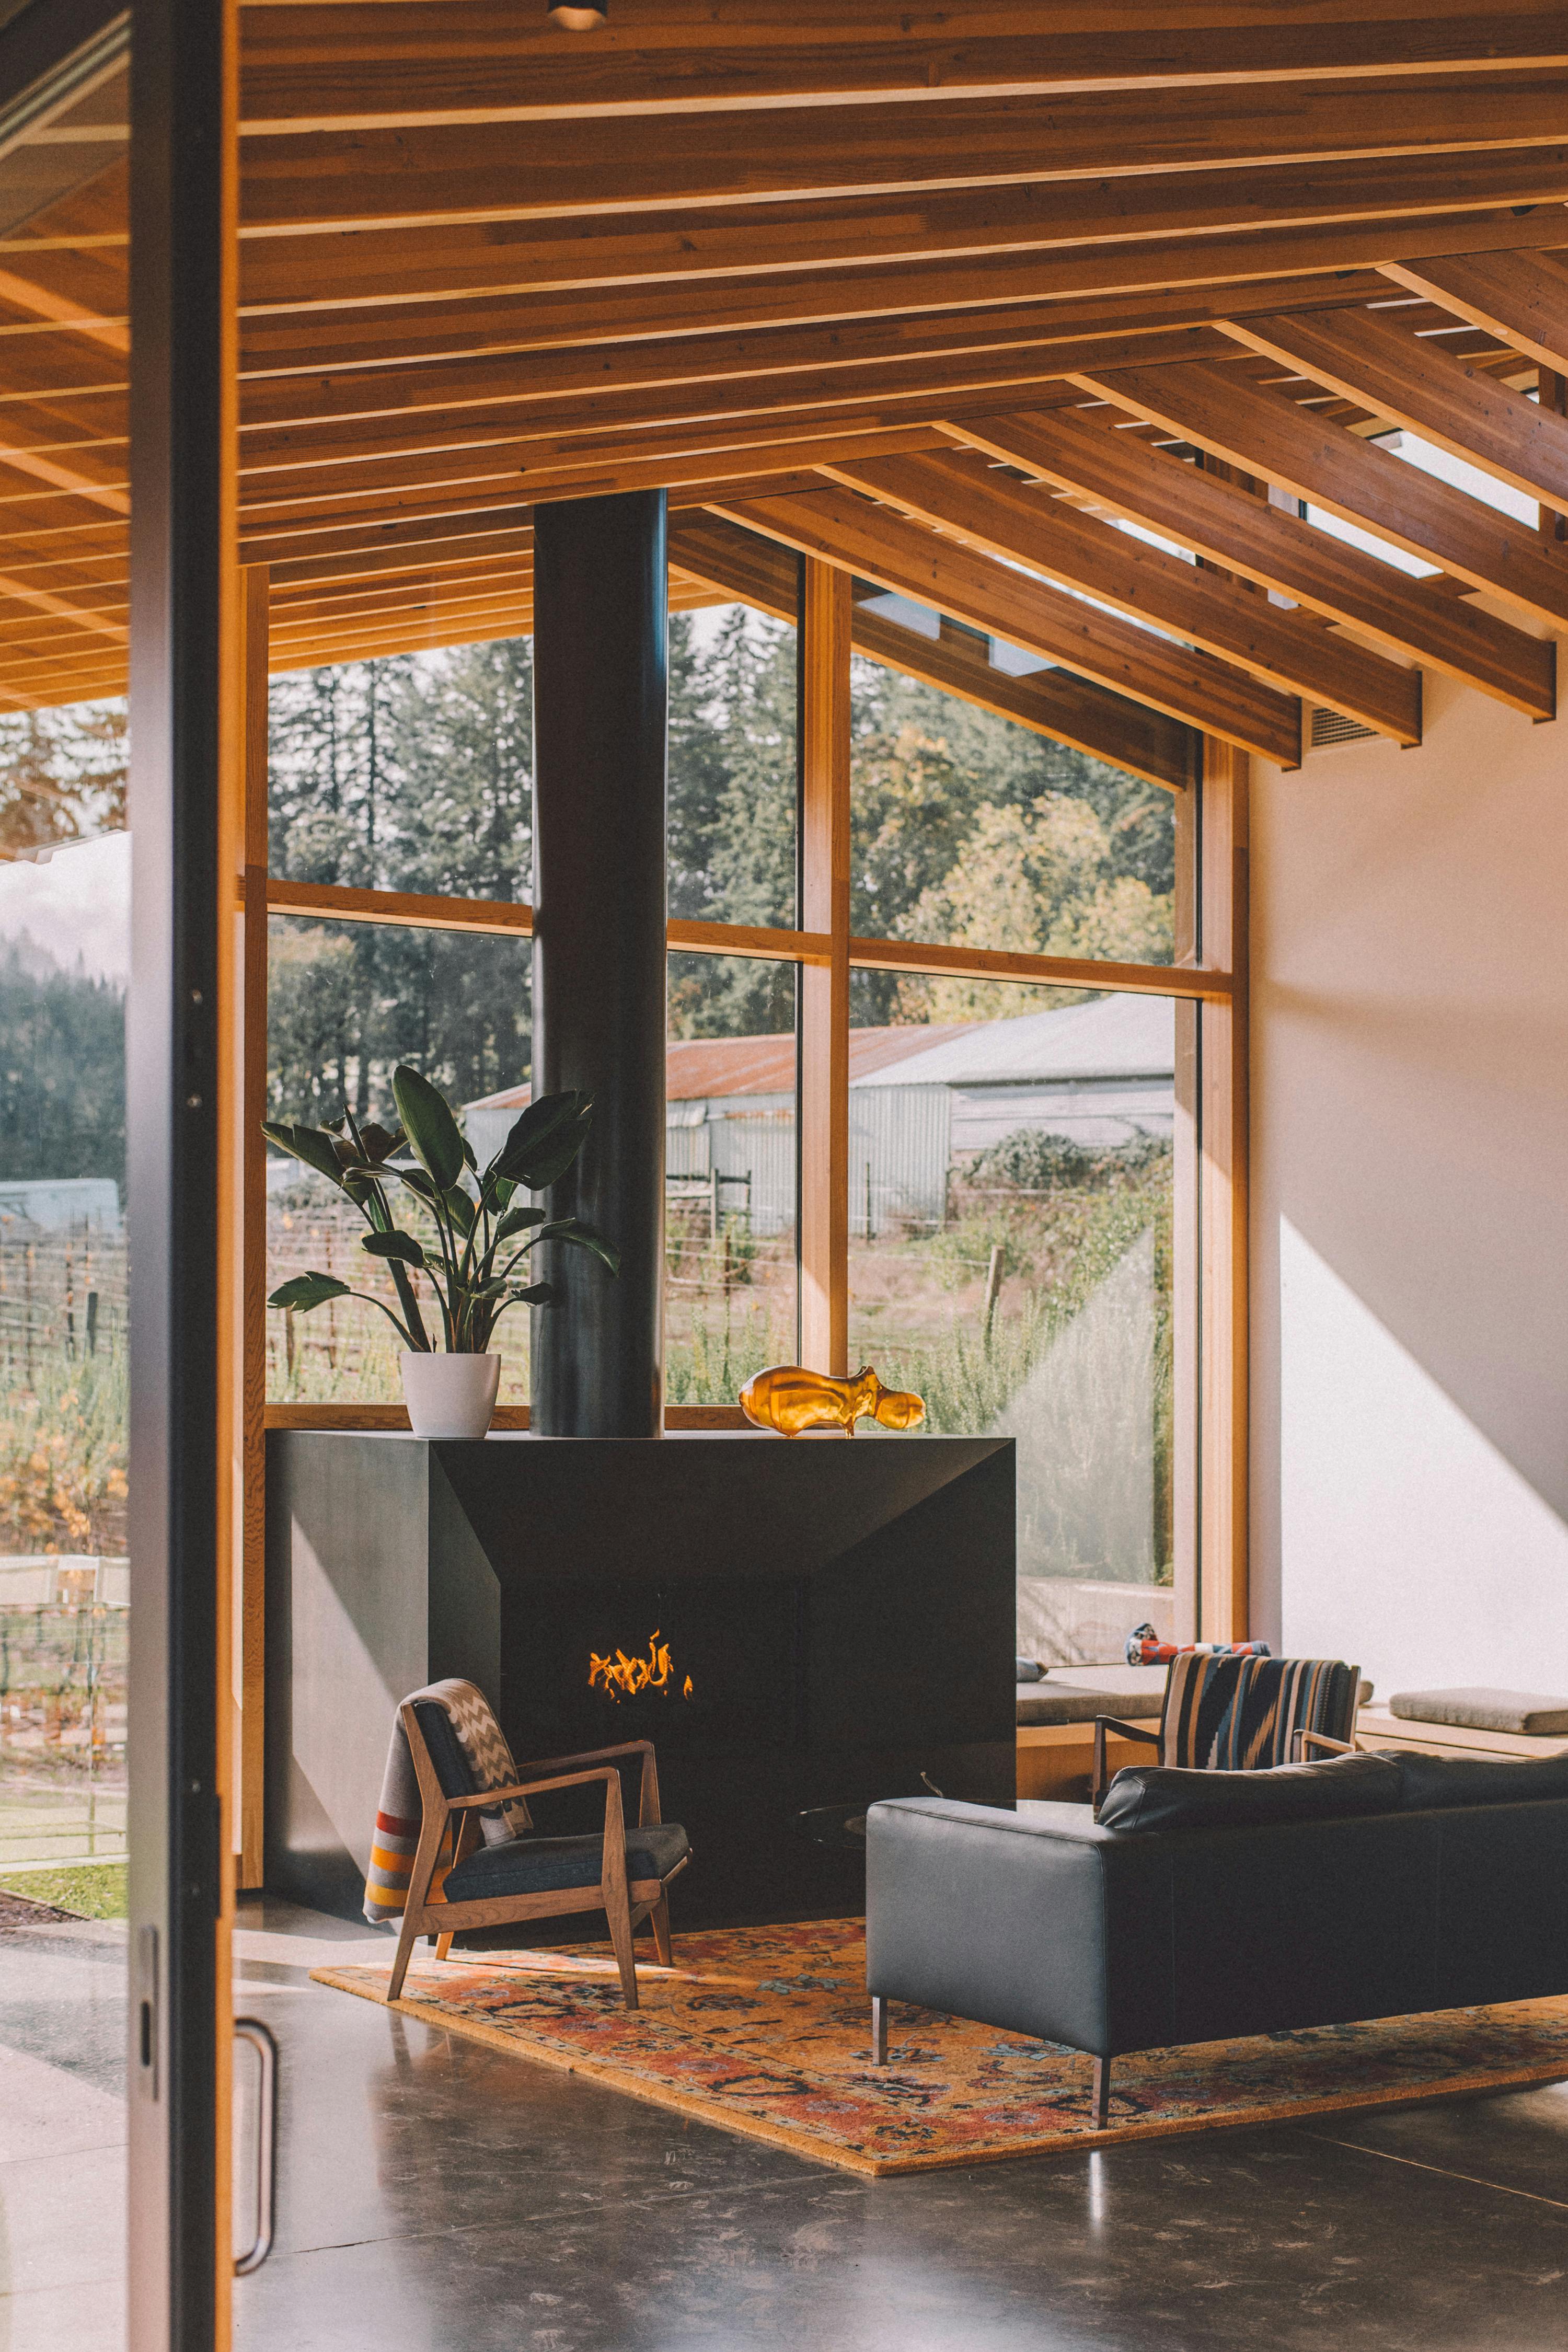 Inside a cozy home | Source: Pexels